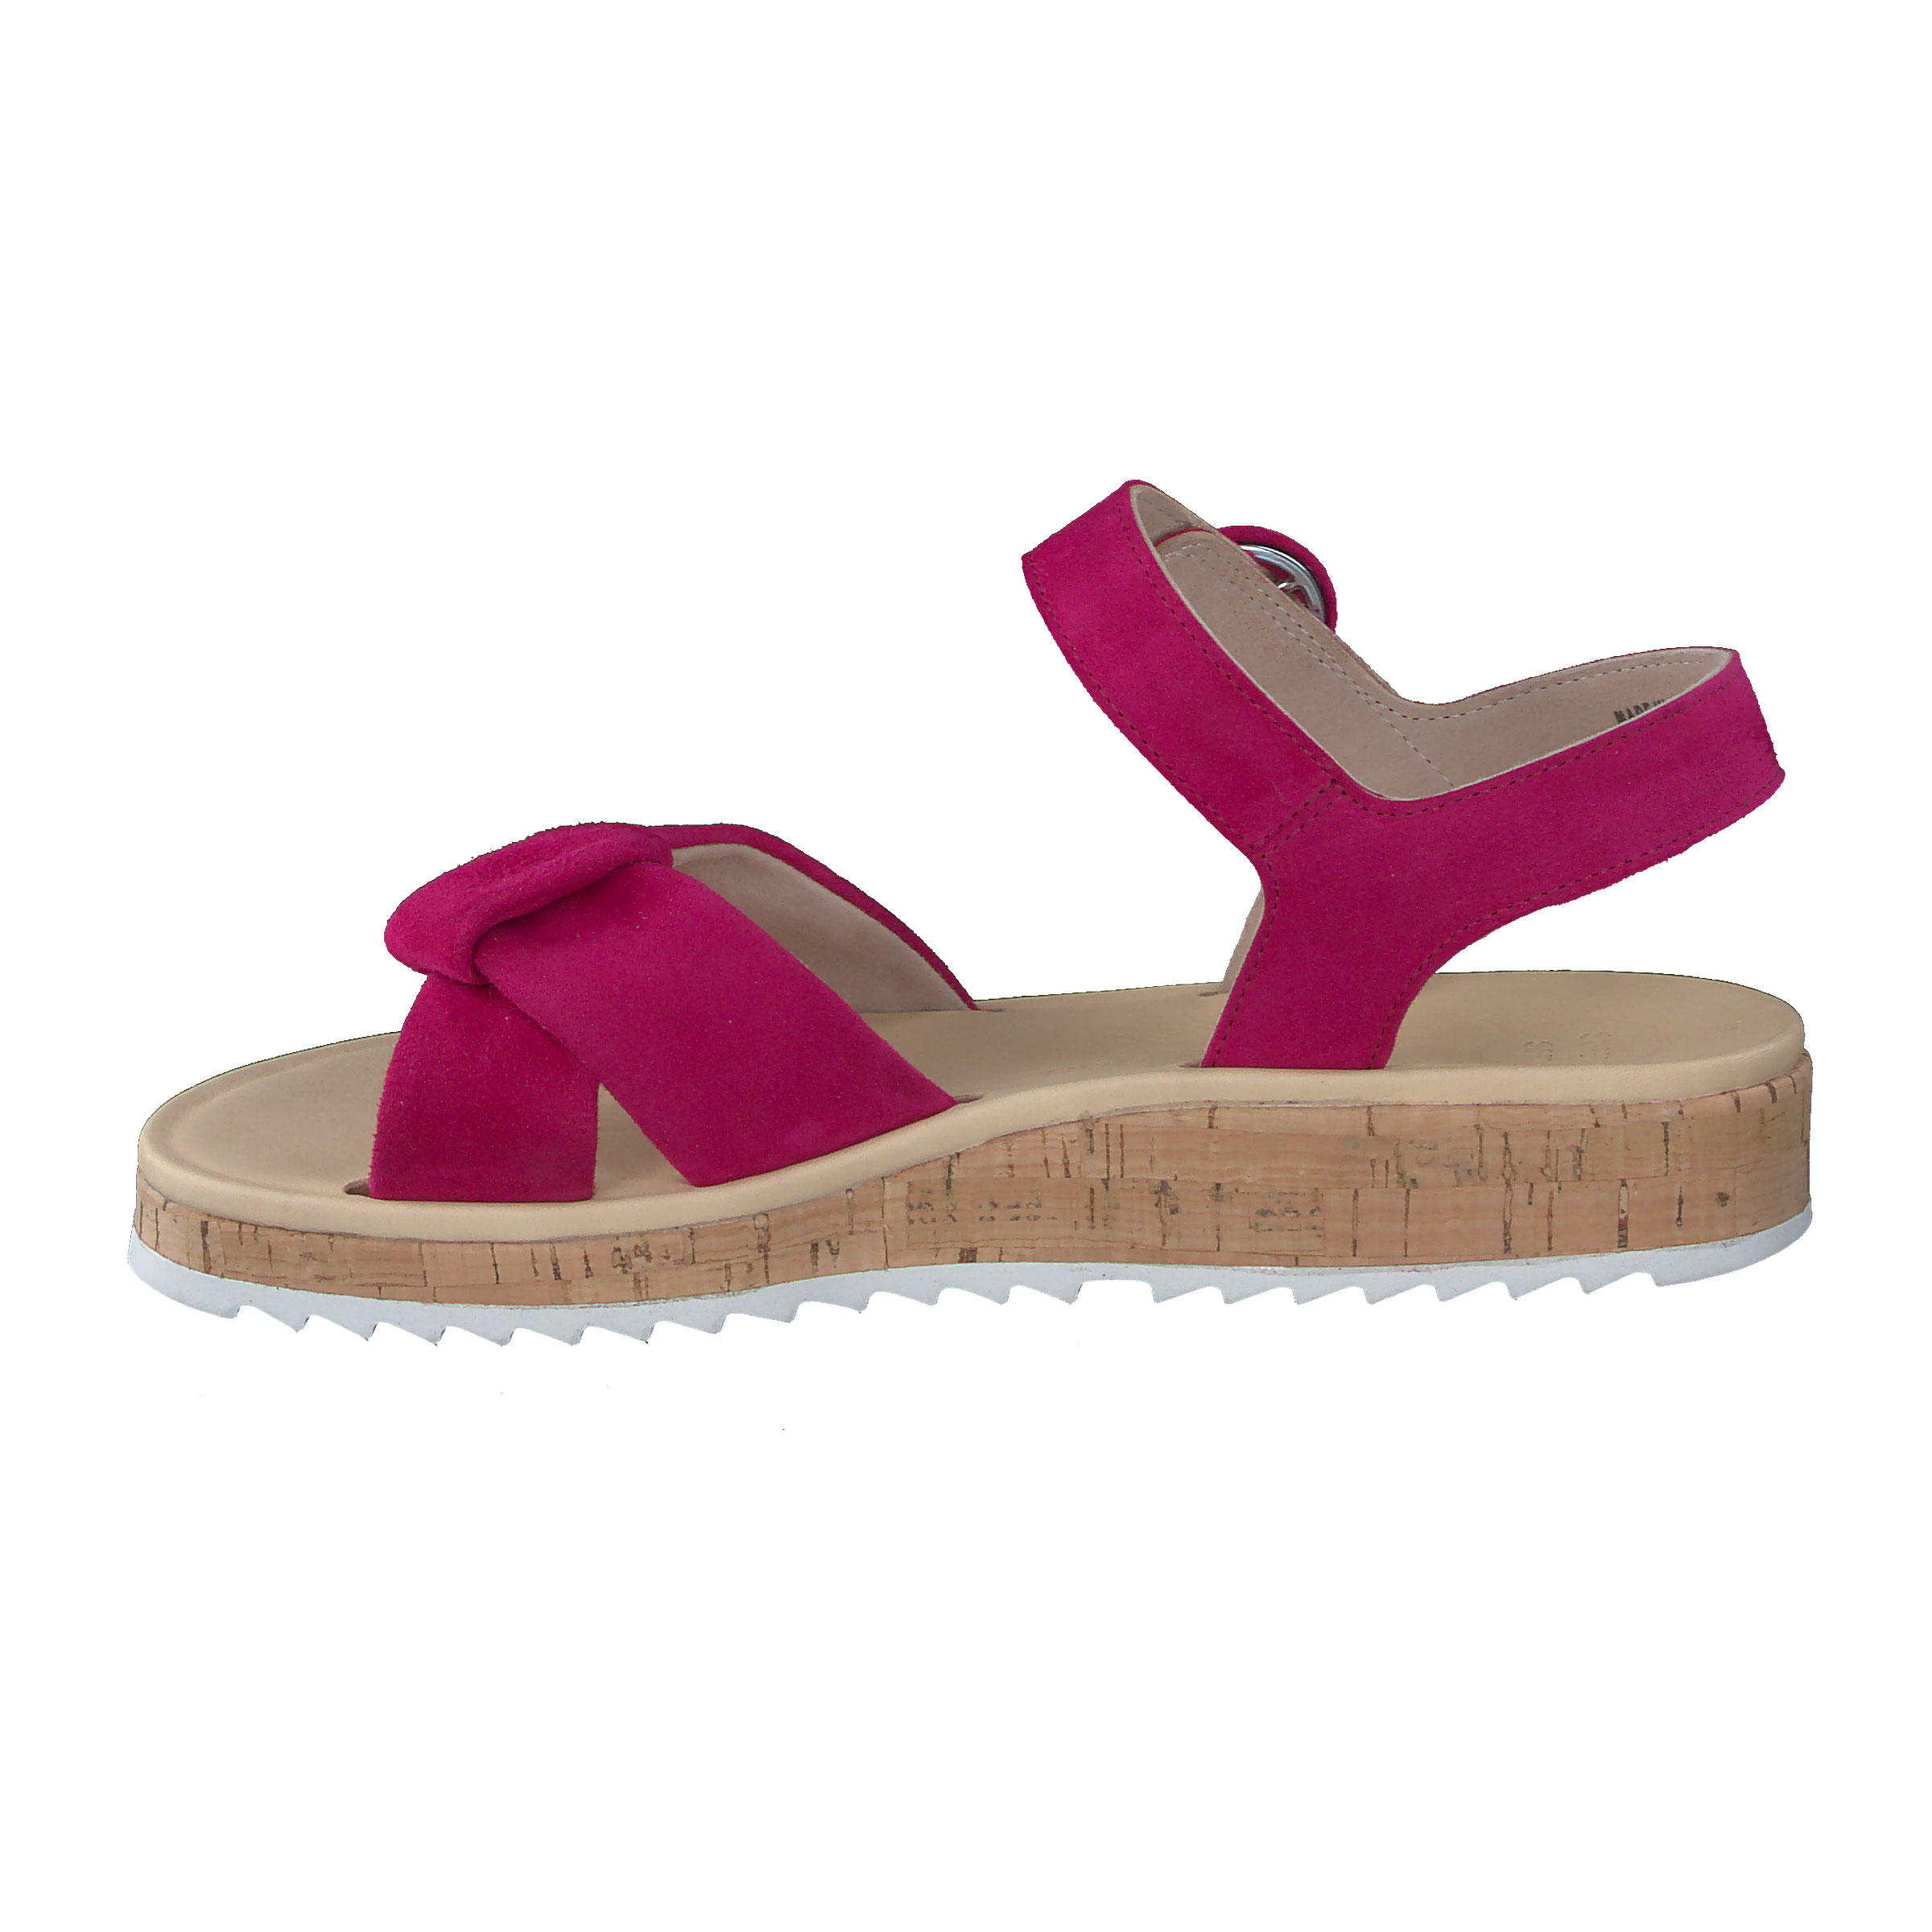 Sandalette - Pink suede leather